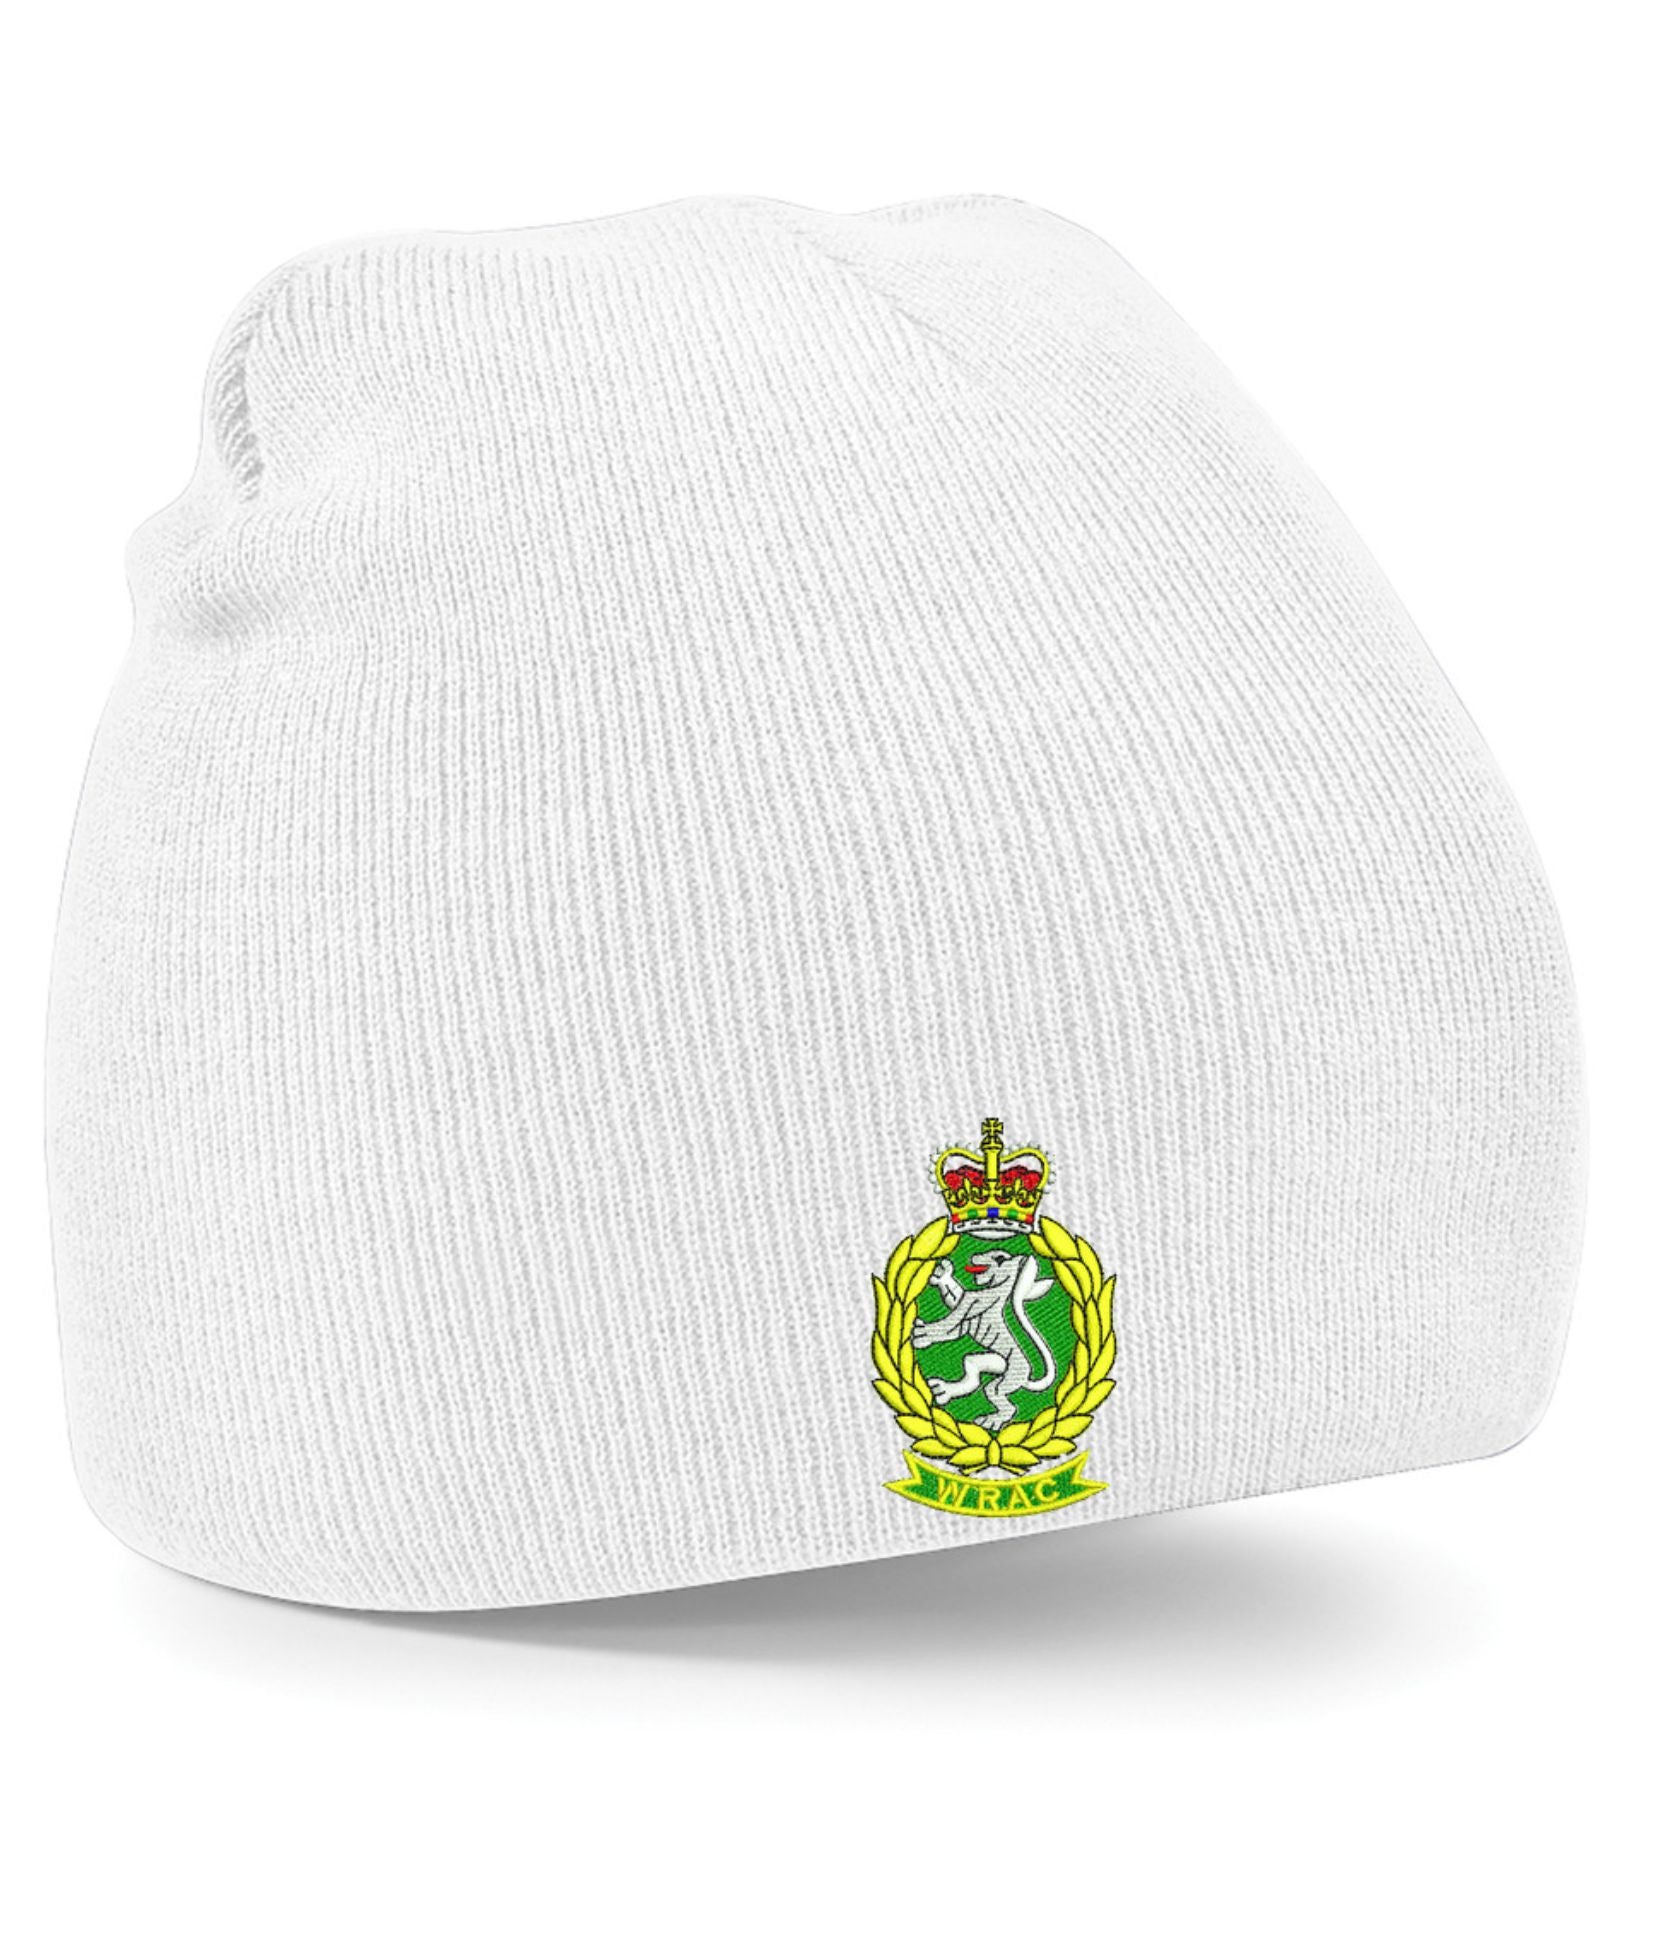 Women's Royal Army Corps WRAC Regiment Beanie Hats